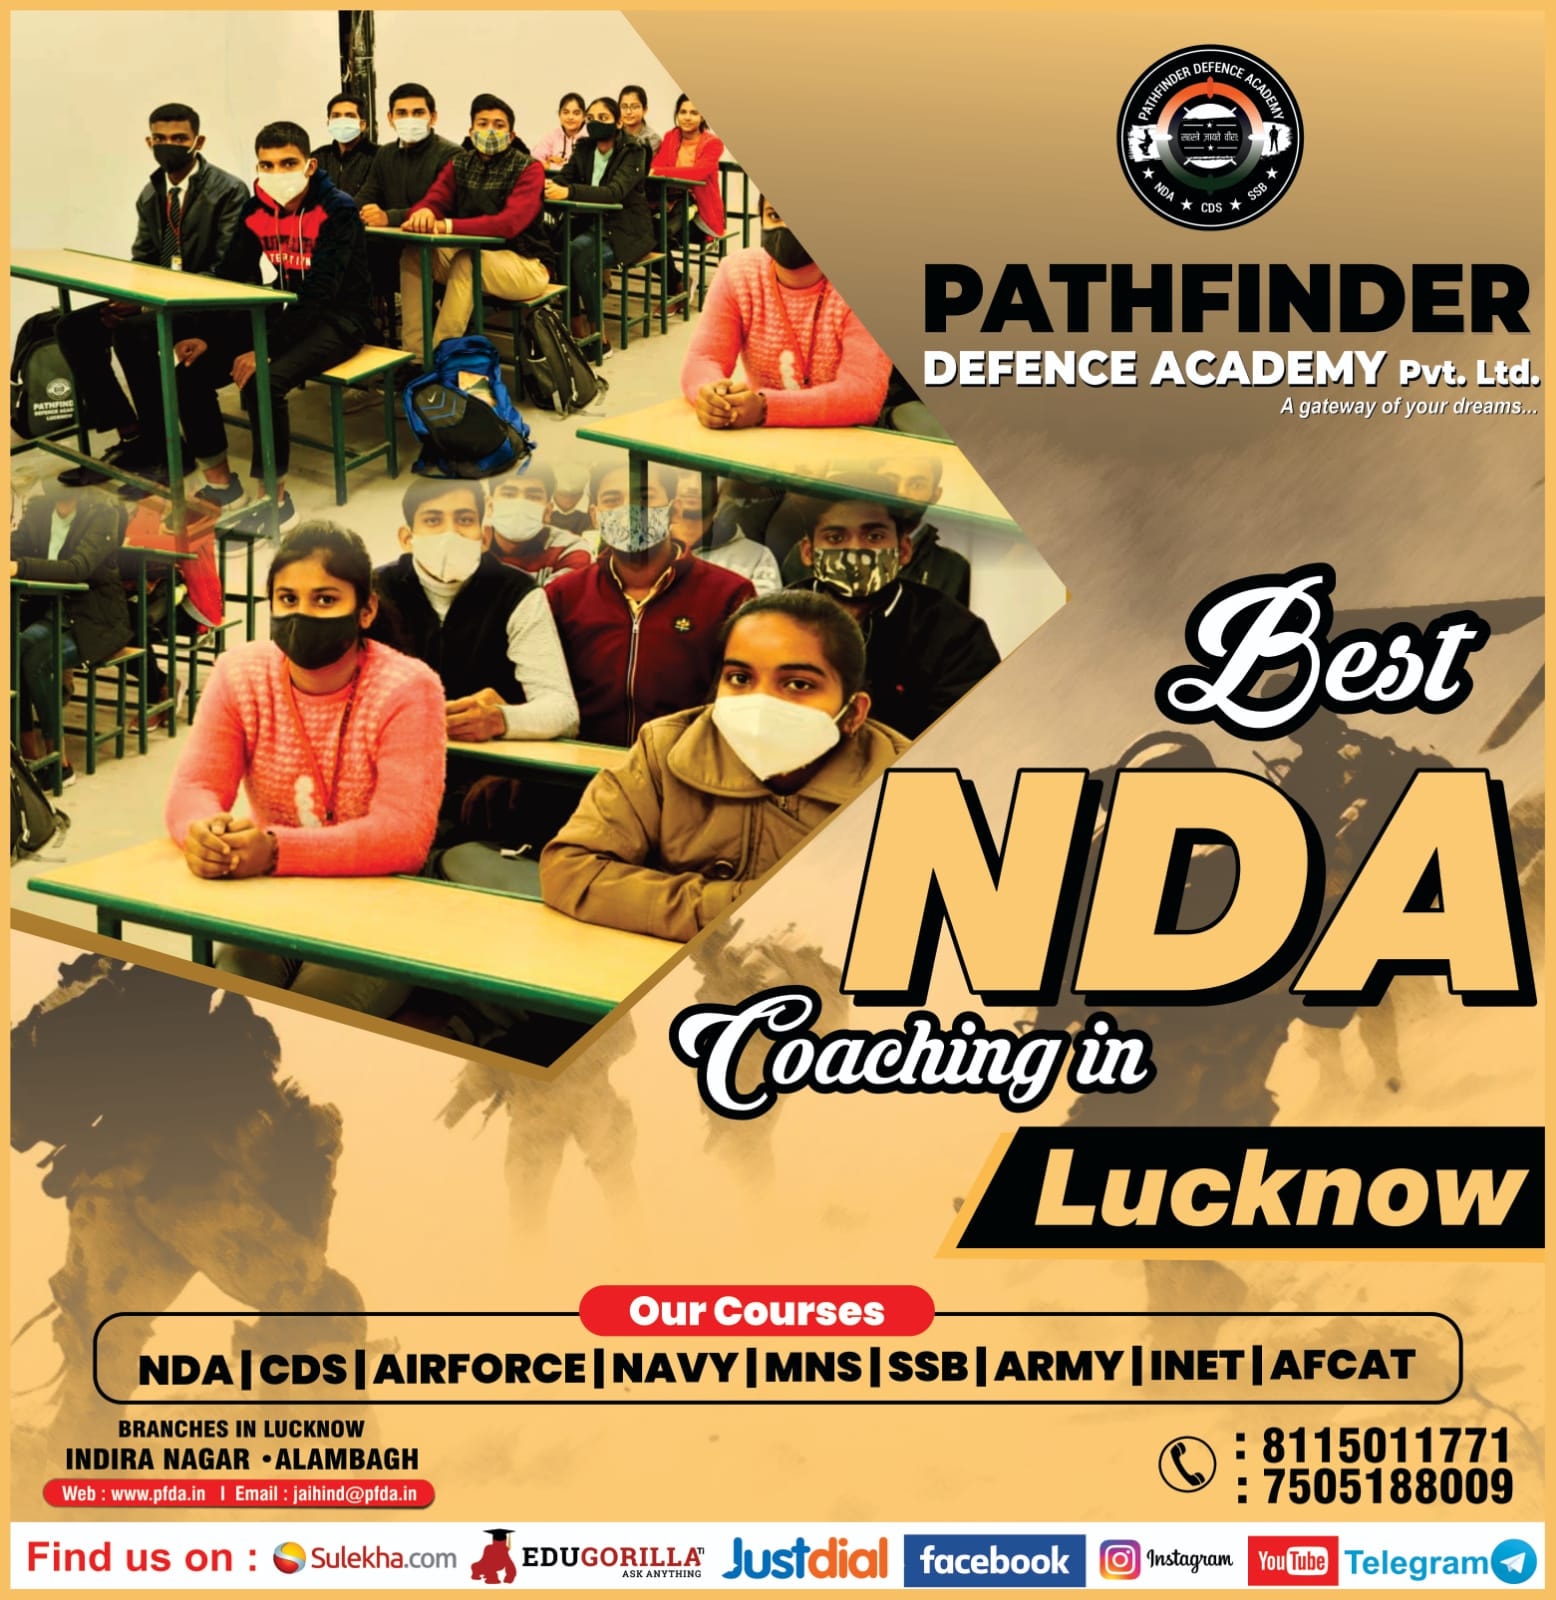 Pathfinder Defence Academy - Lucknow